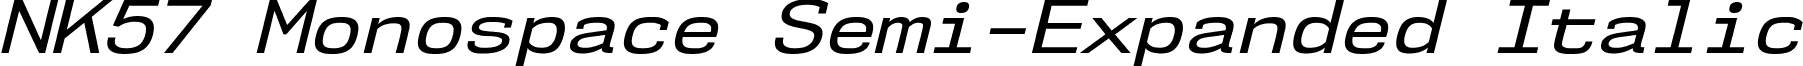 NK57 Monospace Semi-Expanded Italic font - nk57-monospace.semi-expanded-italic.ttf